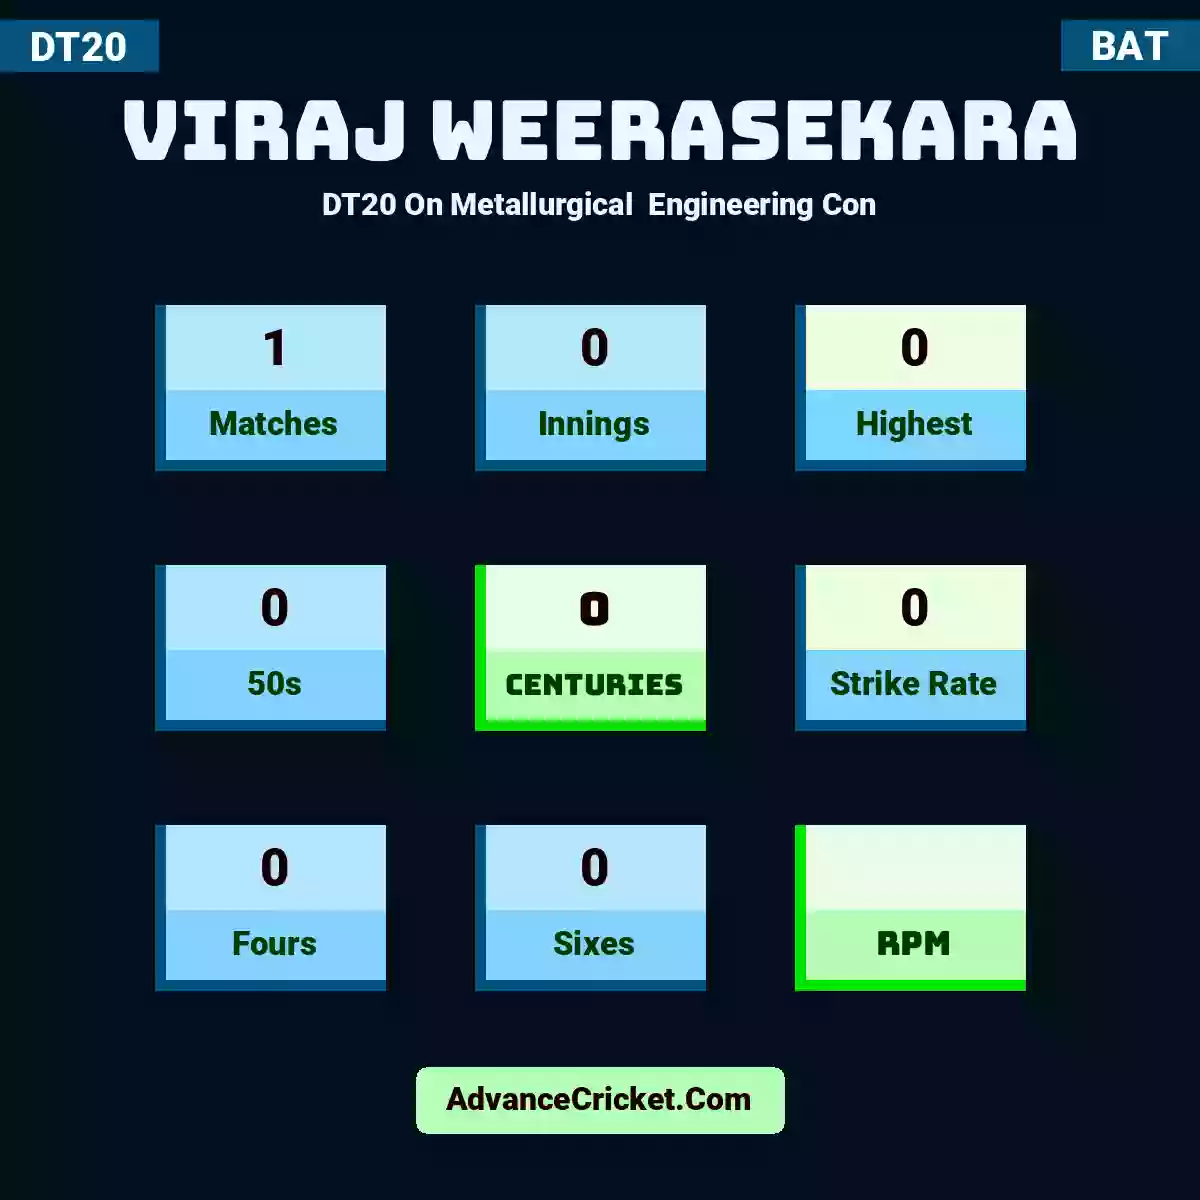 Viraj Weerasekara DT20  On Metallurgical  Engineering Con, Viraj Weerasekara played 1 matches, scored 0 runs as highest, 0 half-centuries, and 0 centuries, with a strike rate of 0. V.Weerasekara hit 0 fours and 0 sixes.